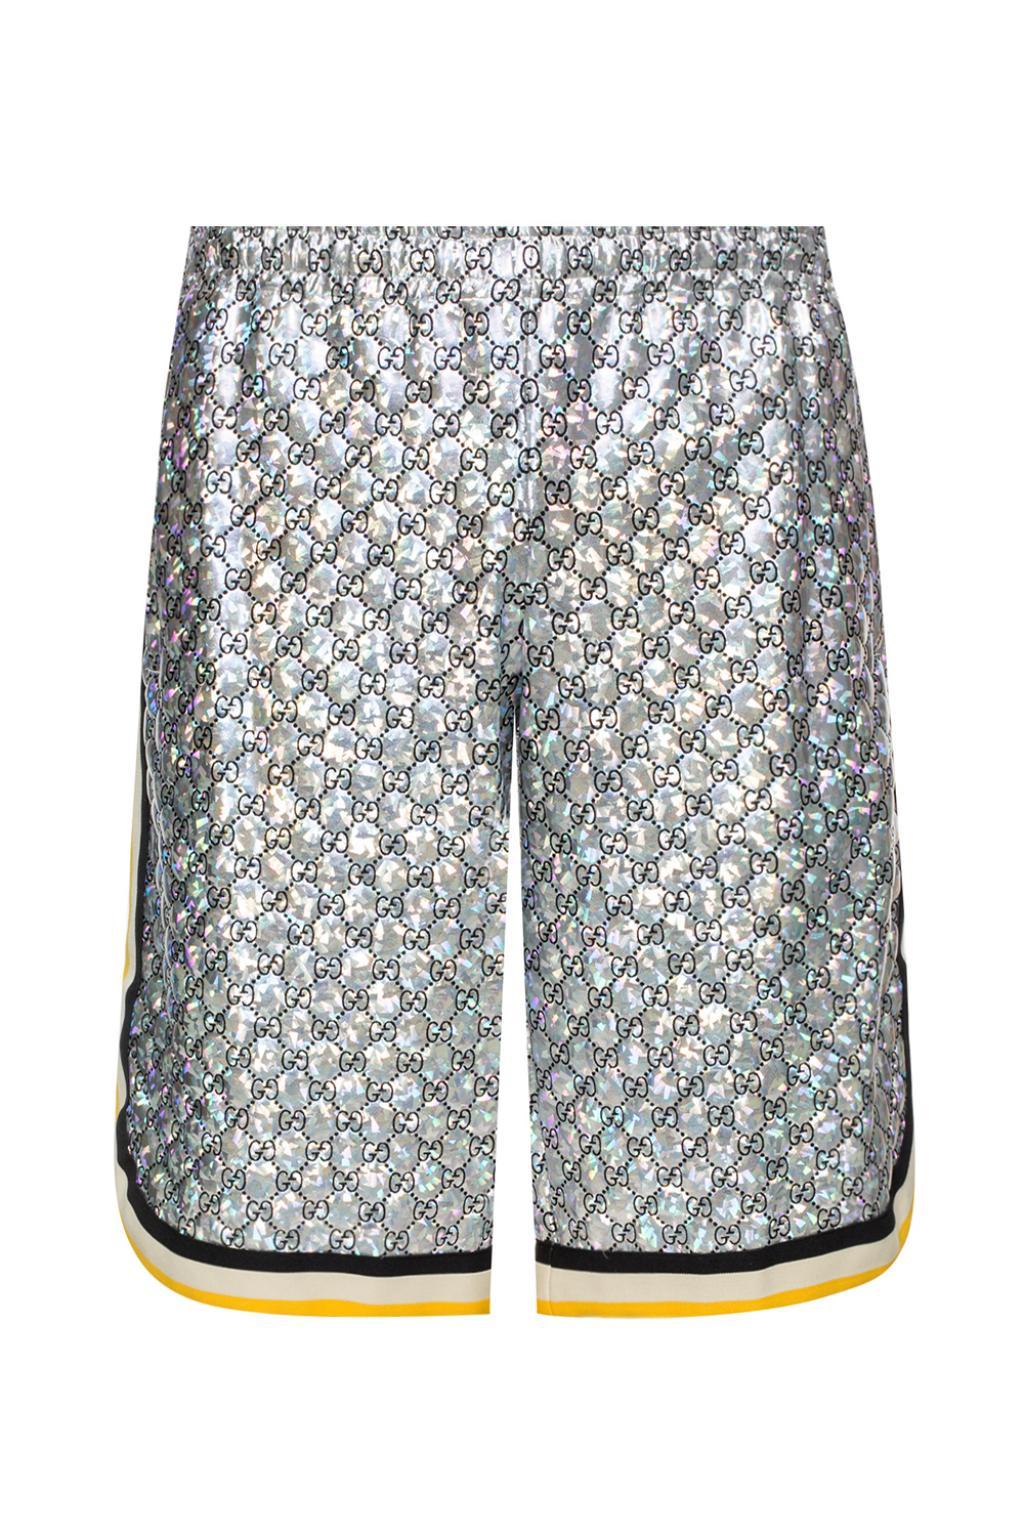 Gucci Logo Shorts in Metallic for Men - Lyst